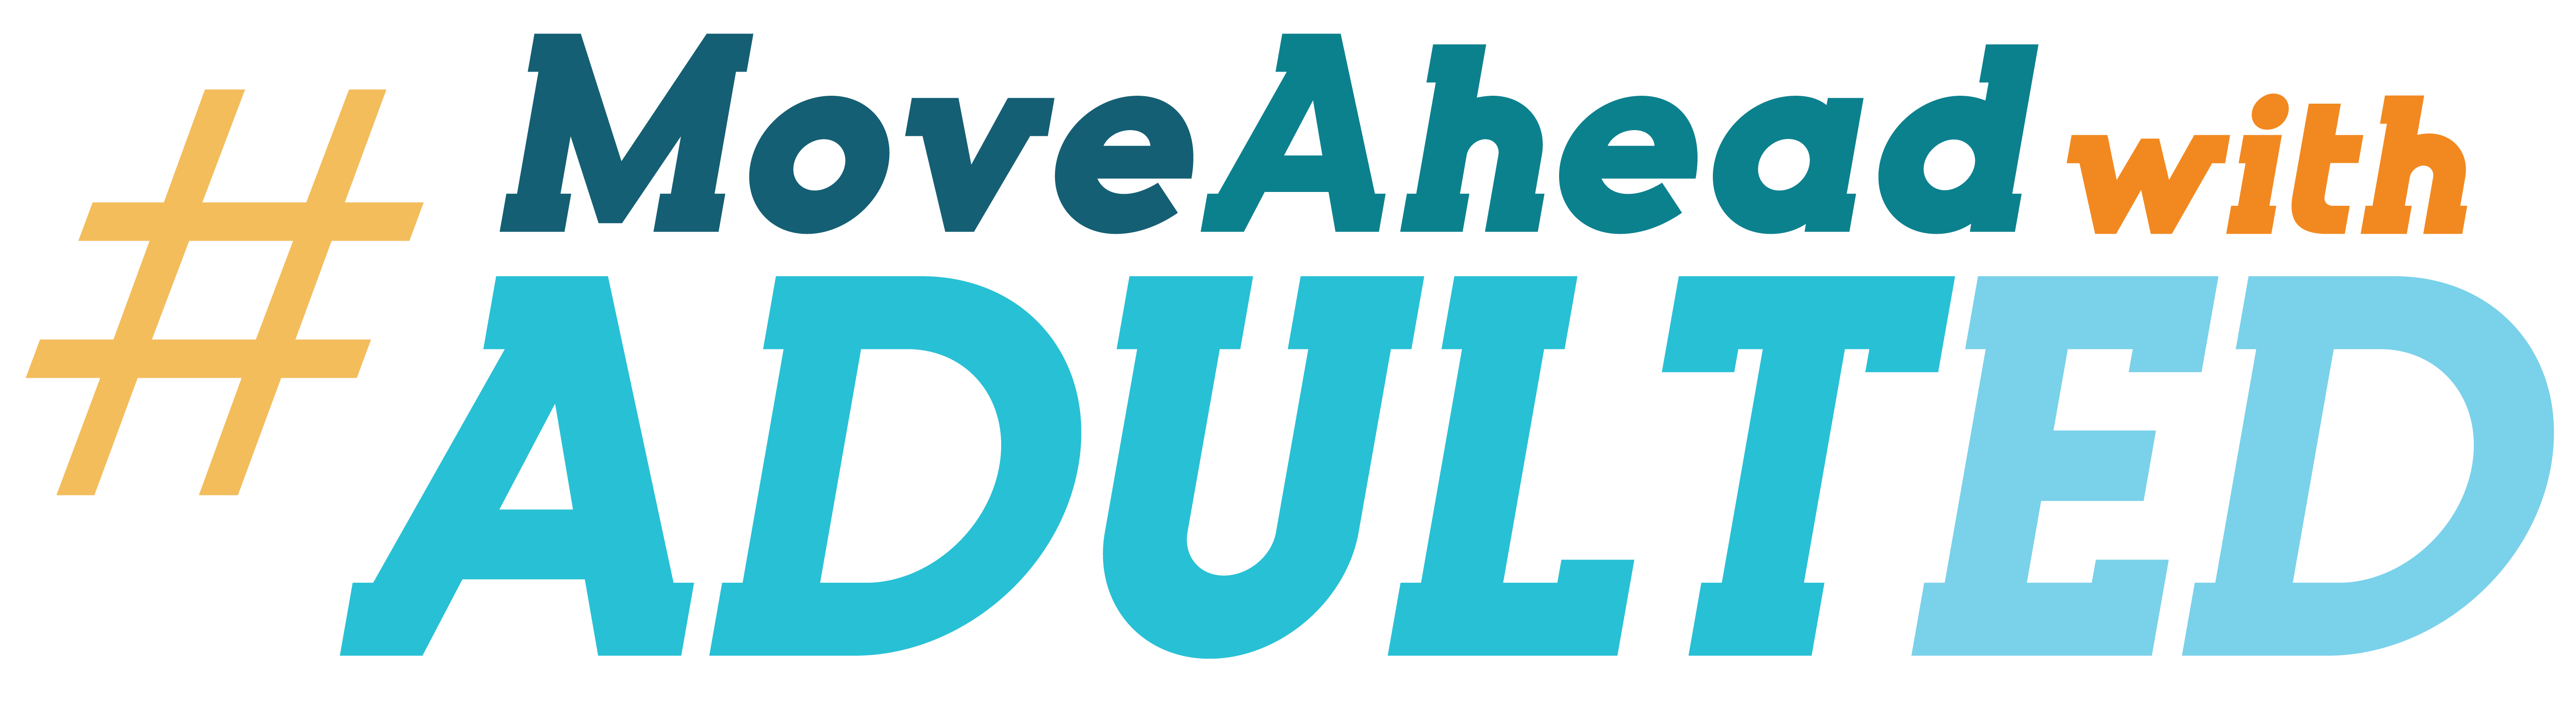 MoveAhead Campaign logo